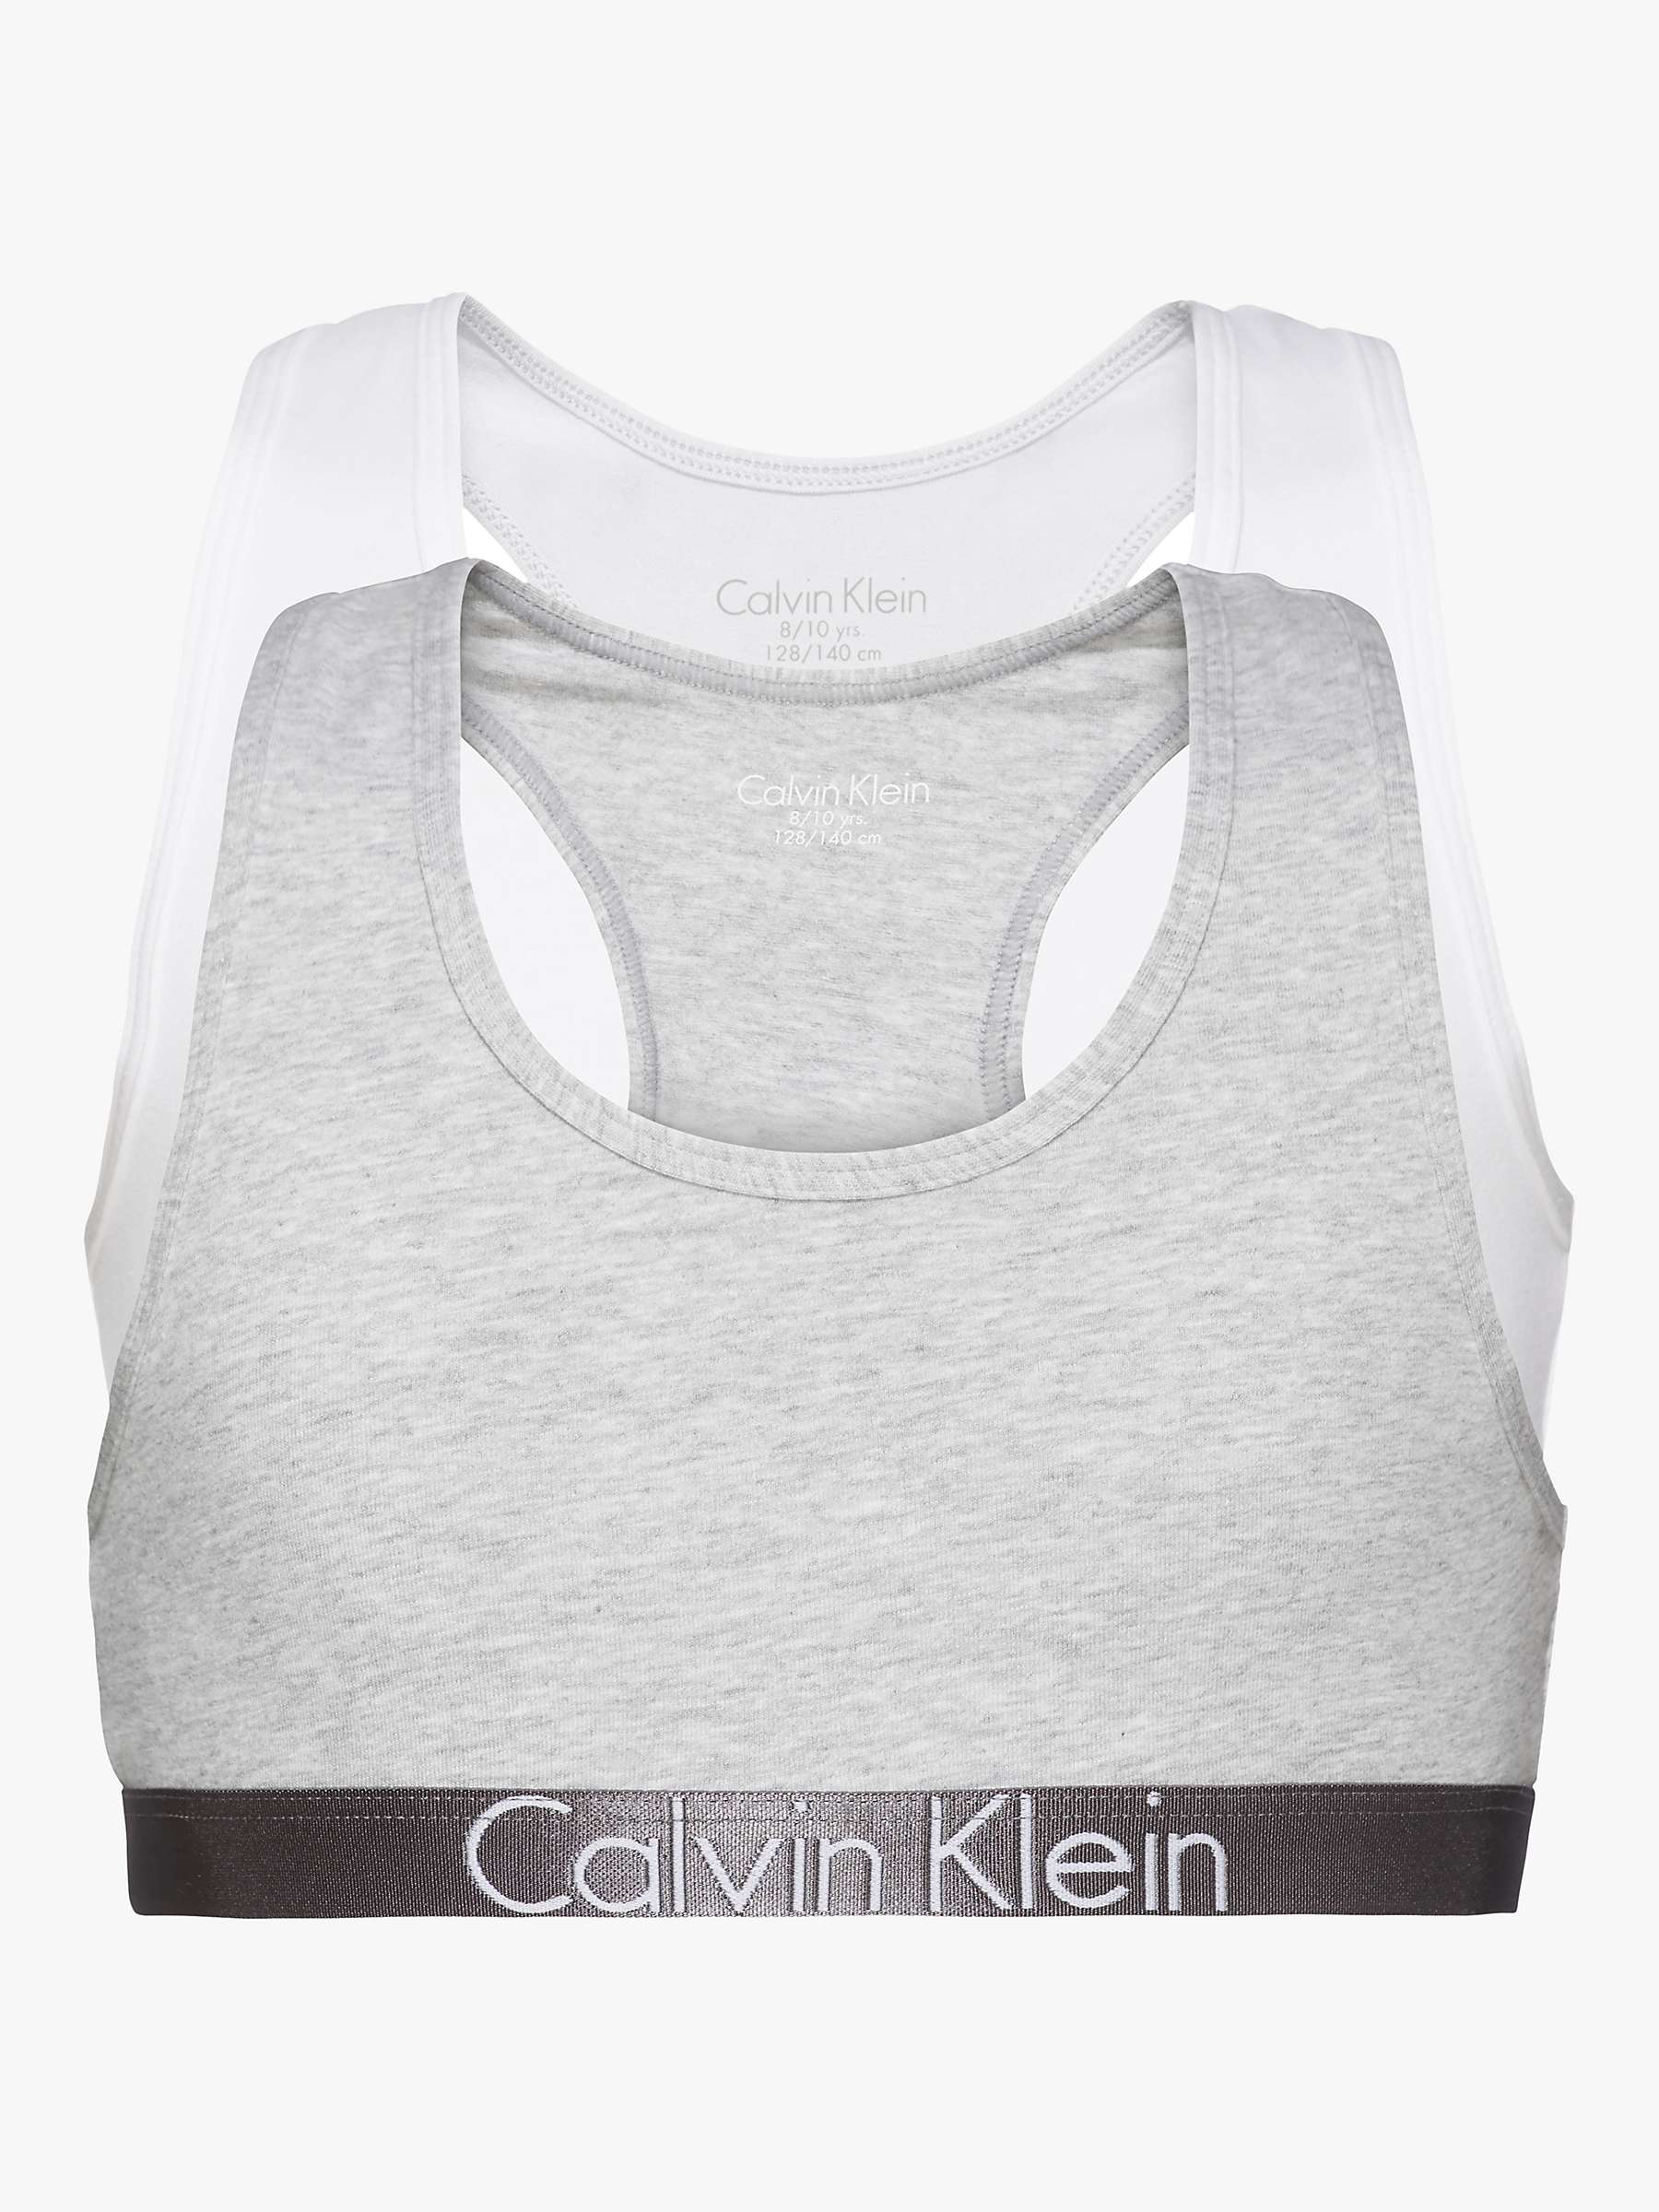 Buy Calvin Klein Kids' Bralette, Pack of 2 Online at johnlewis.com